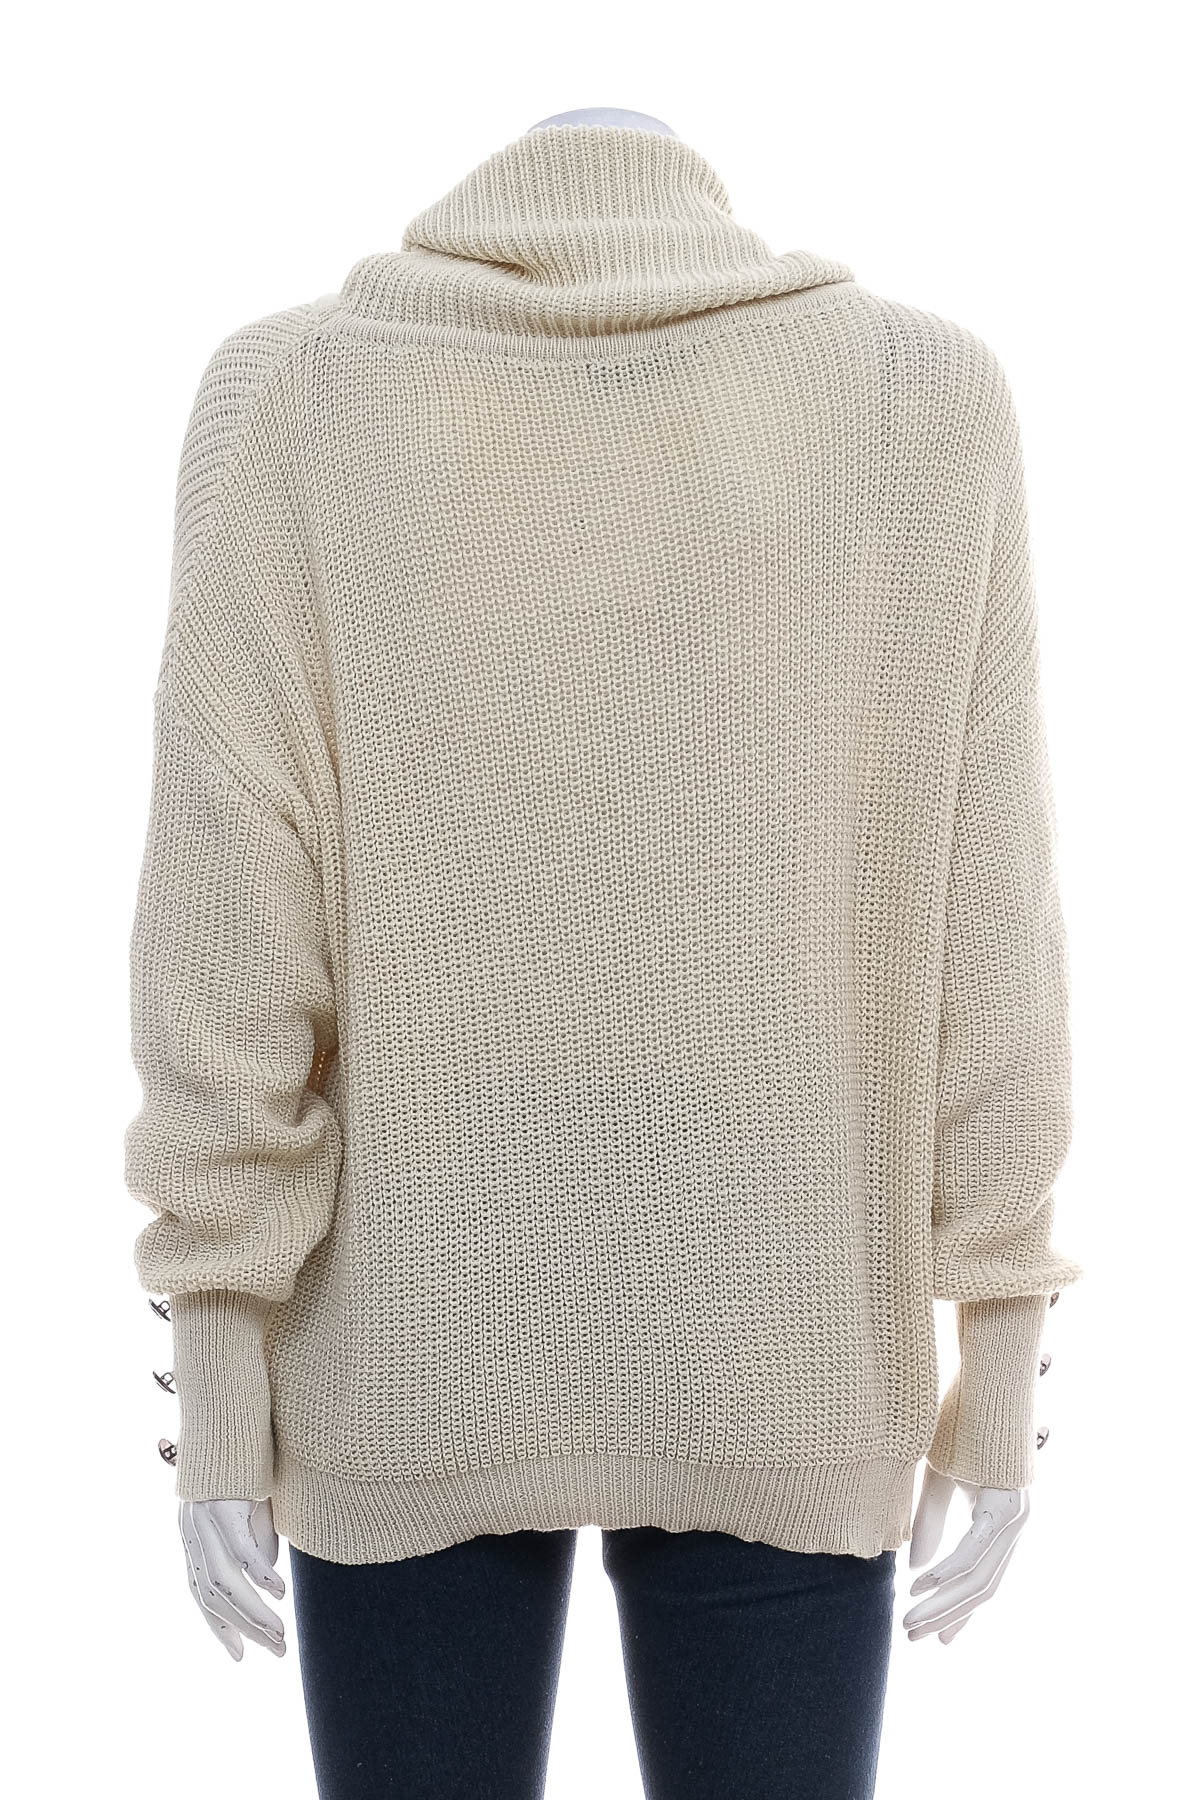 Women's sweater - C.O.Z.Y by Shopcozy - 1